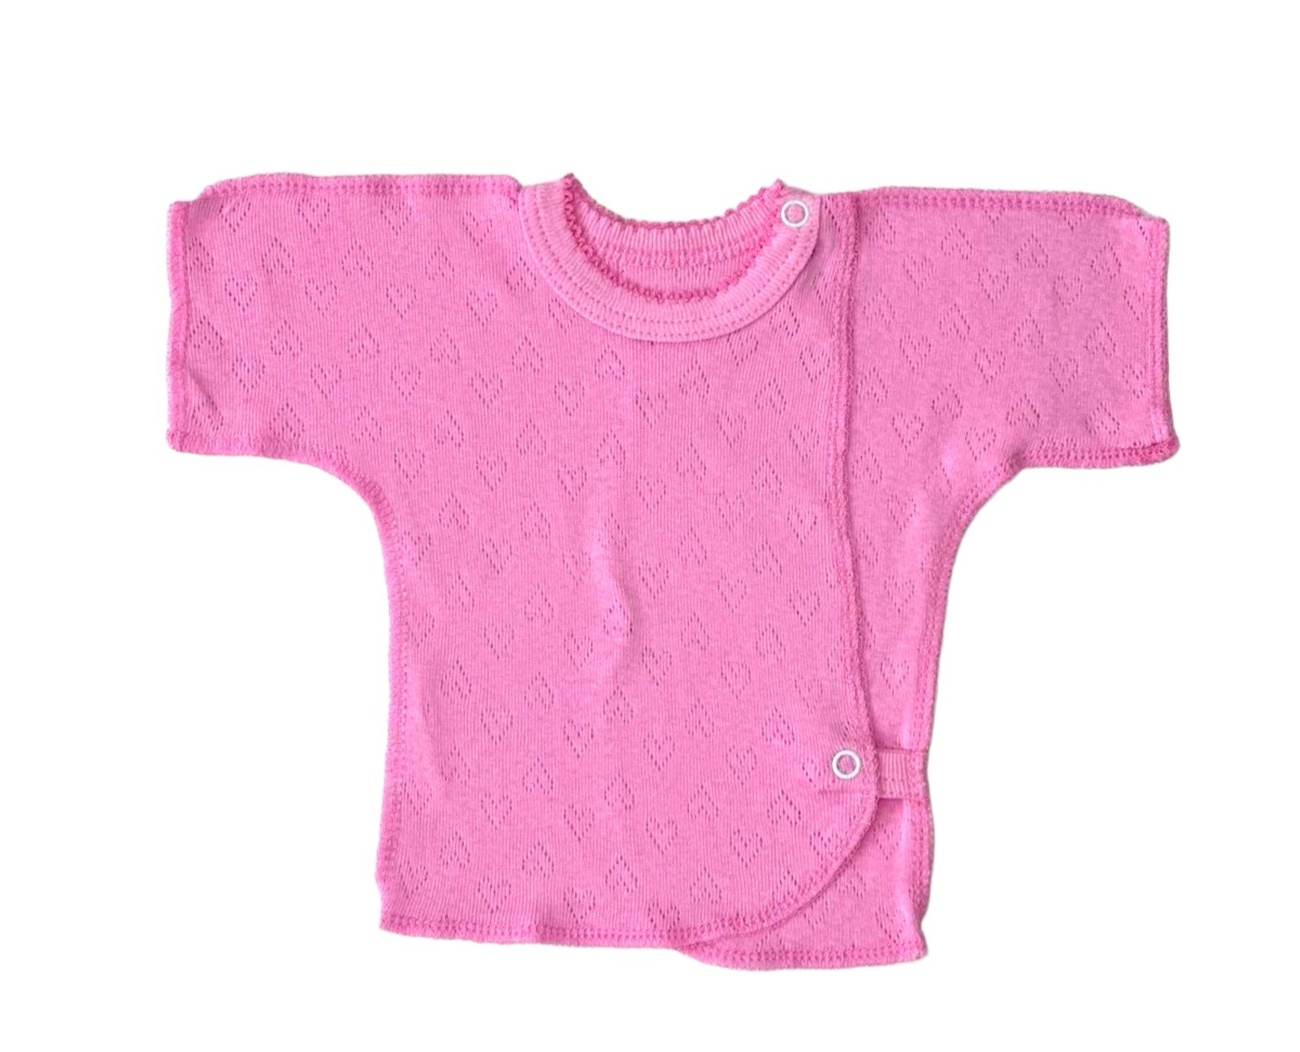 Распашонка с коротким рукавом трансфер розового цвета, Розовый, 0-1 месяц, 56см